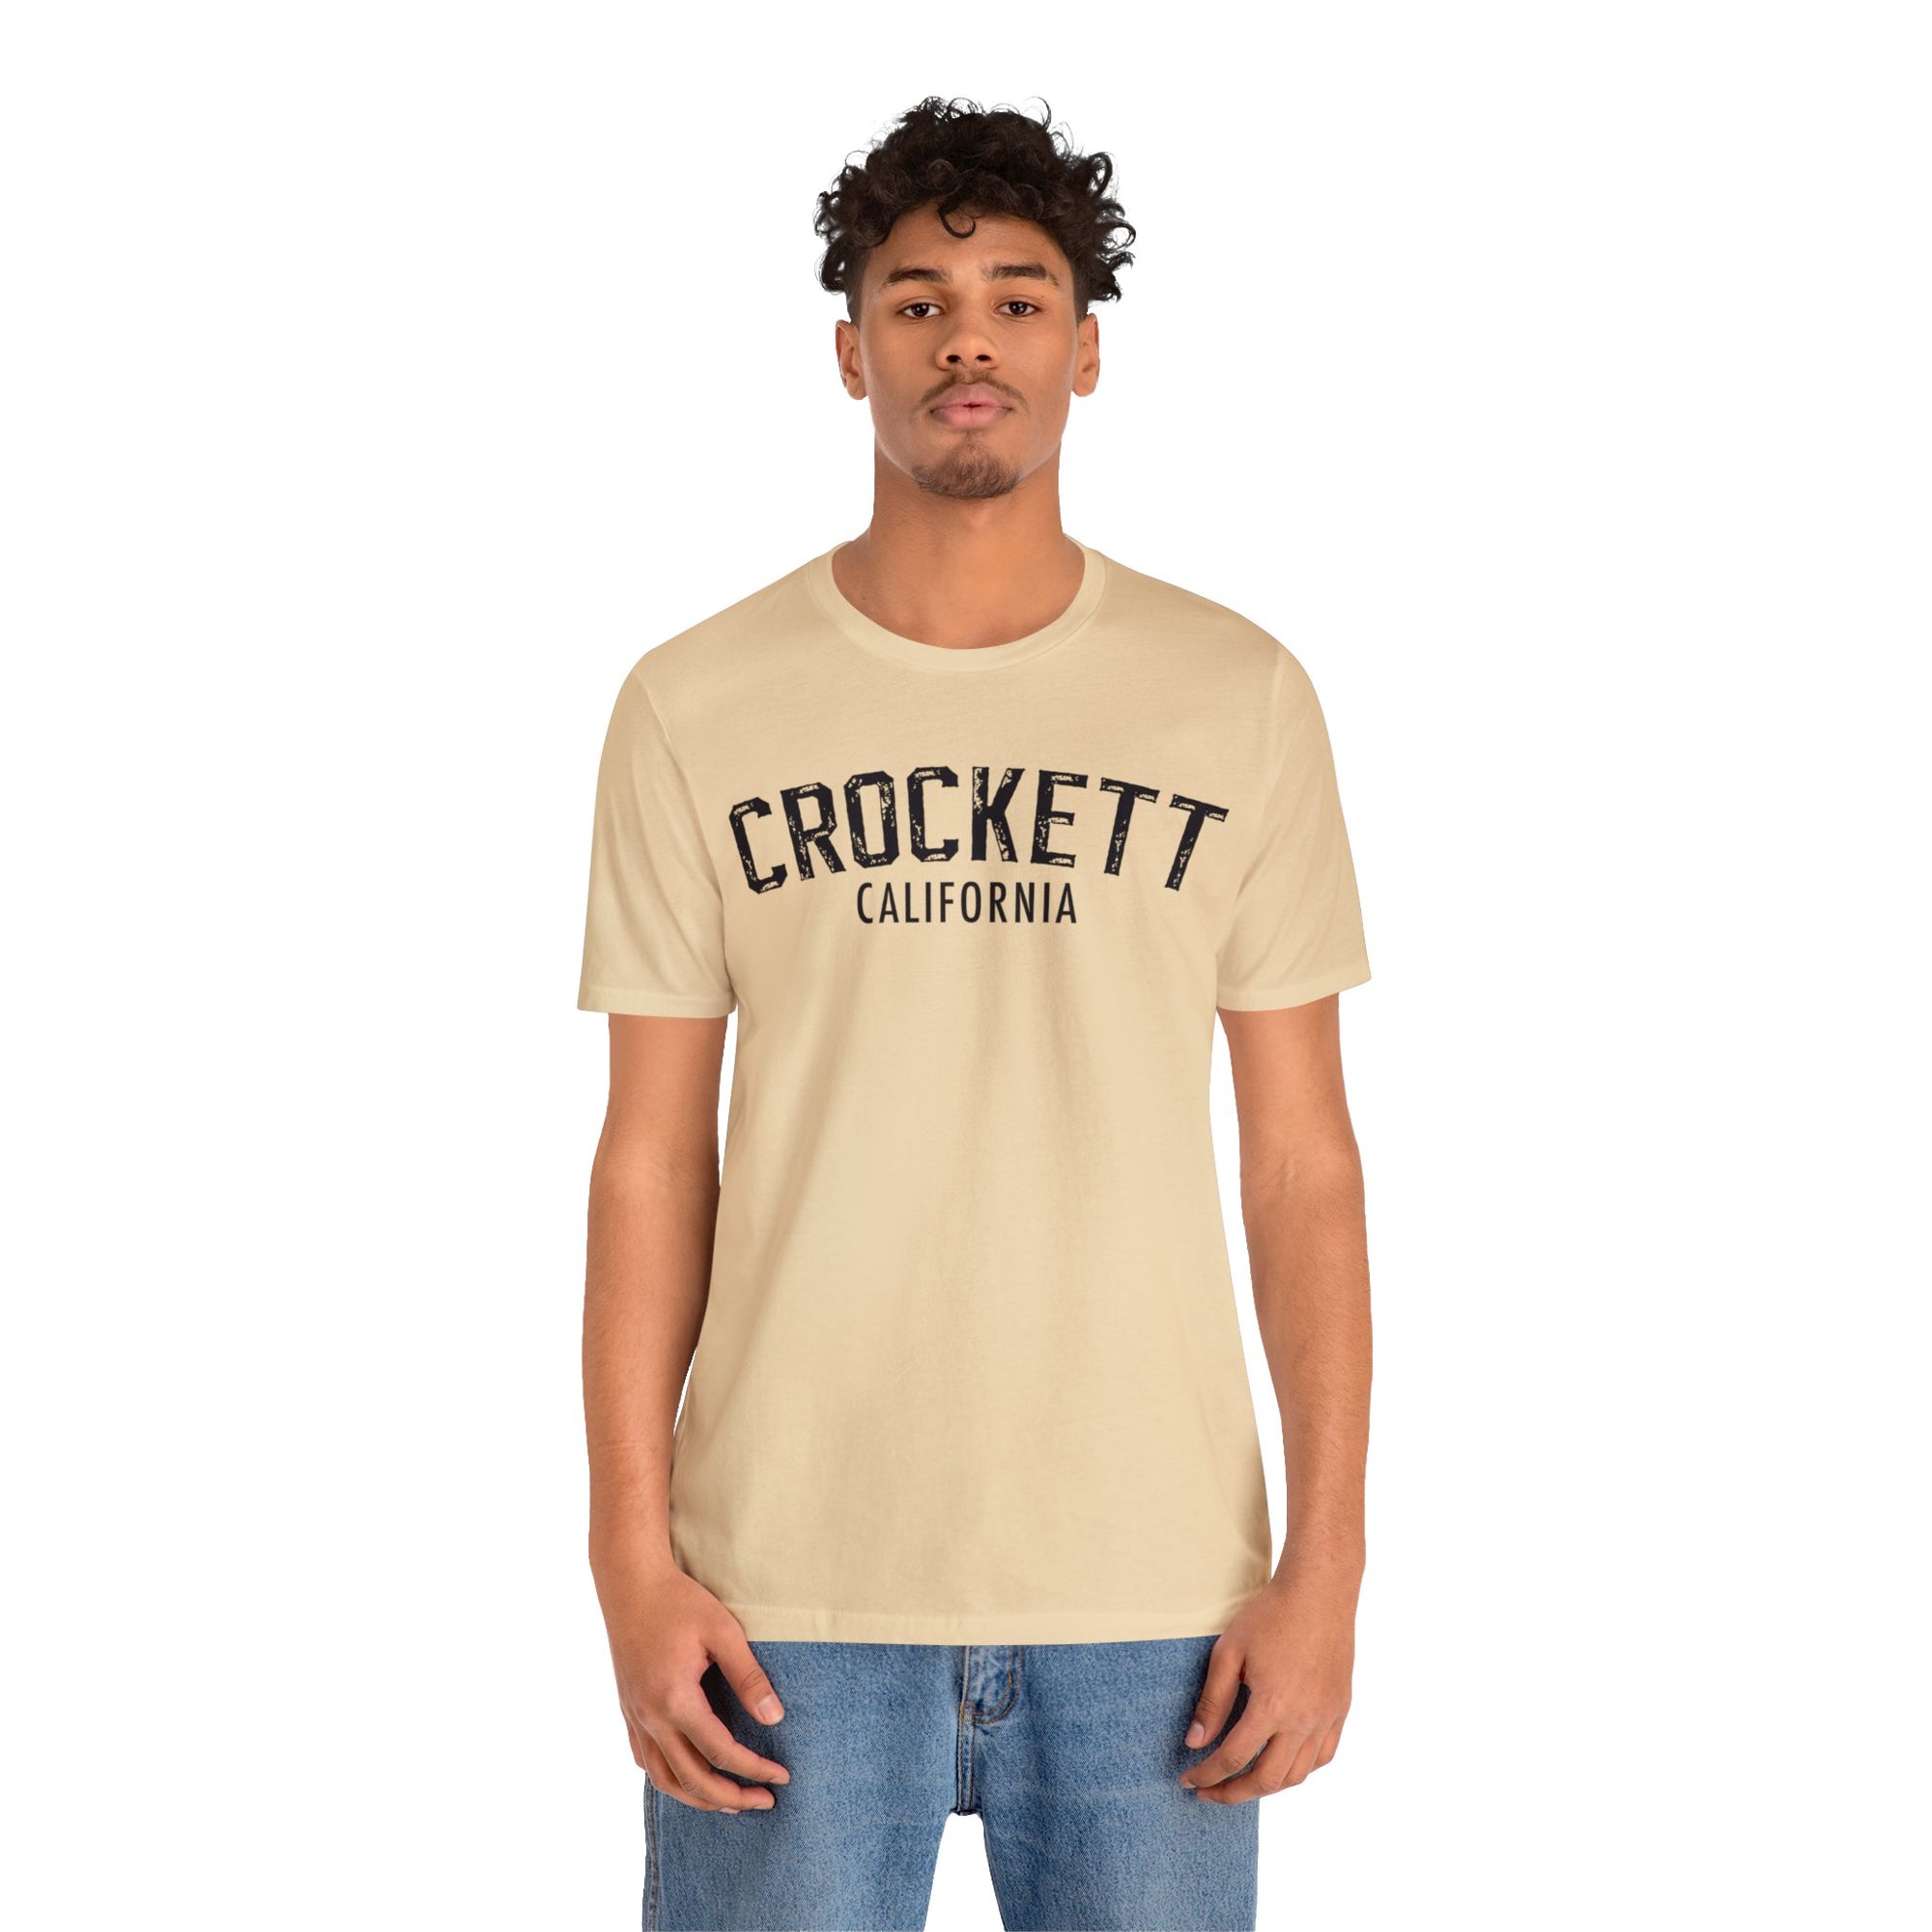 Crockett California